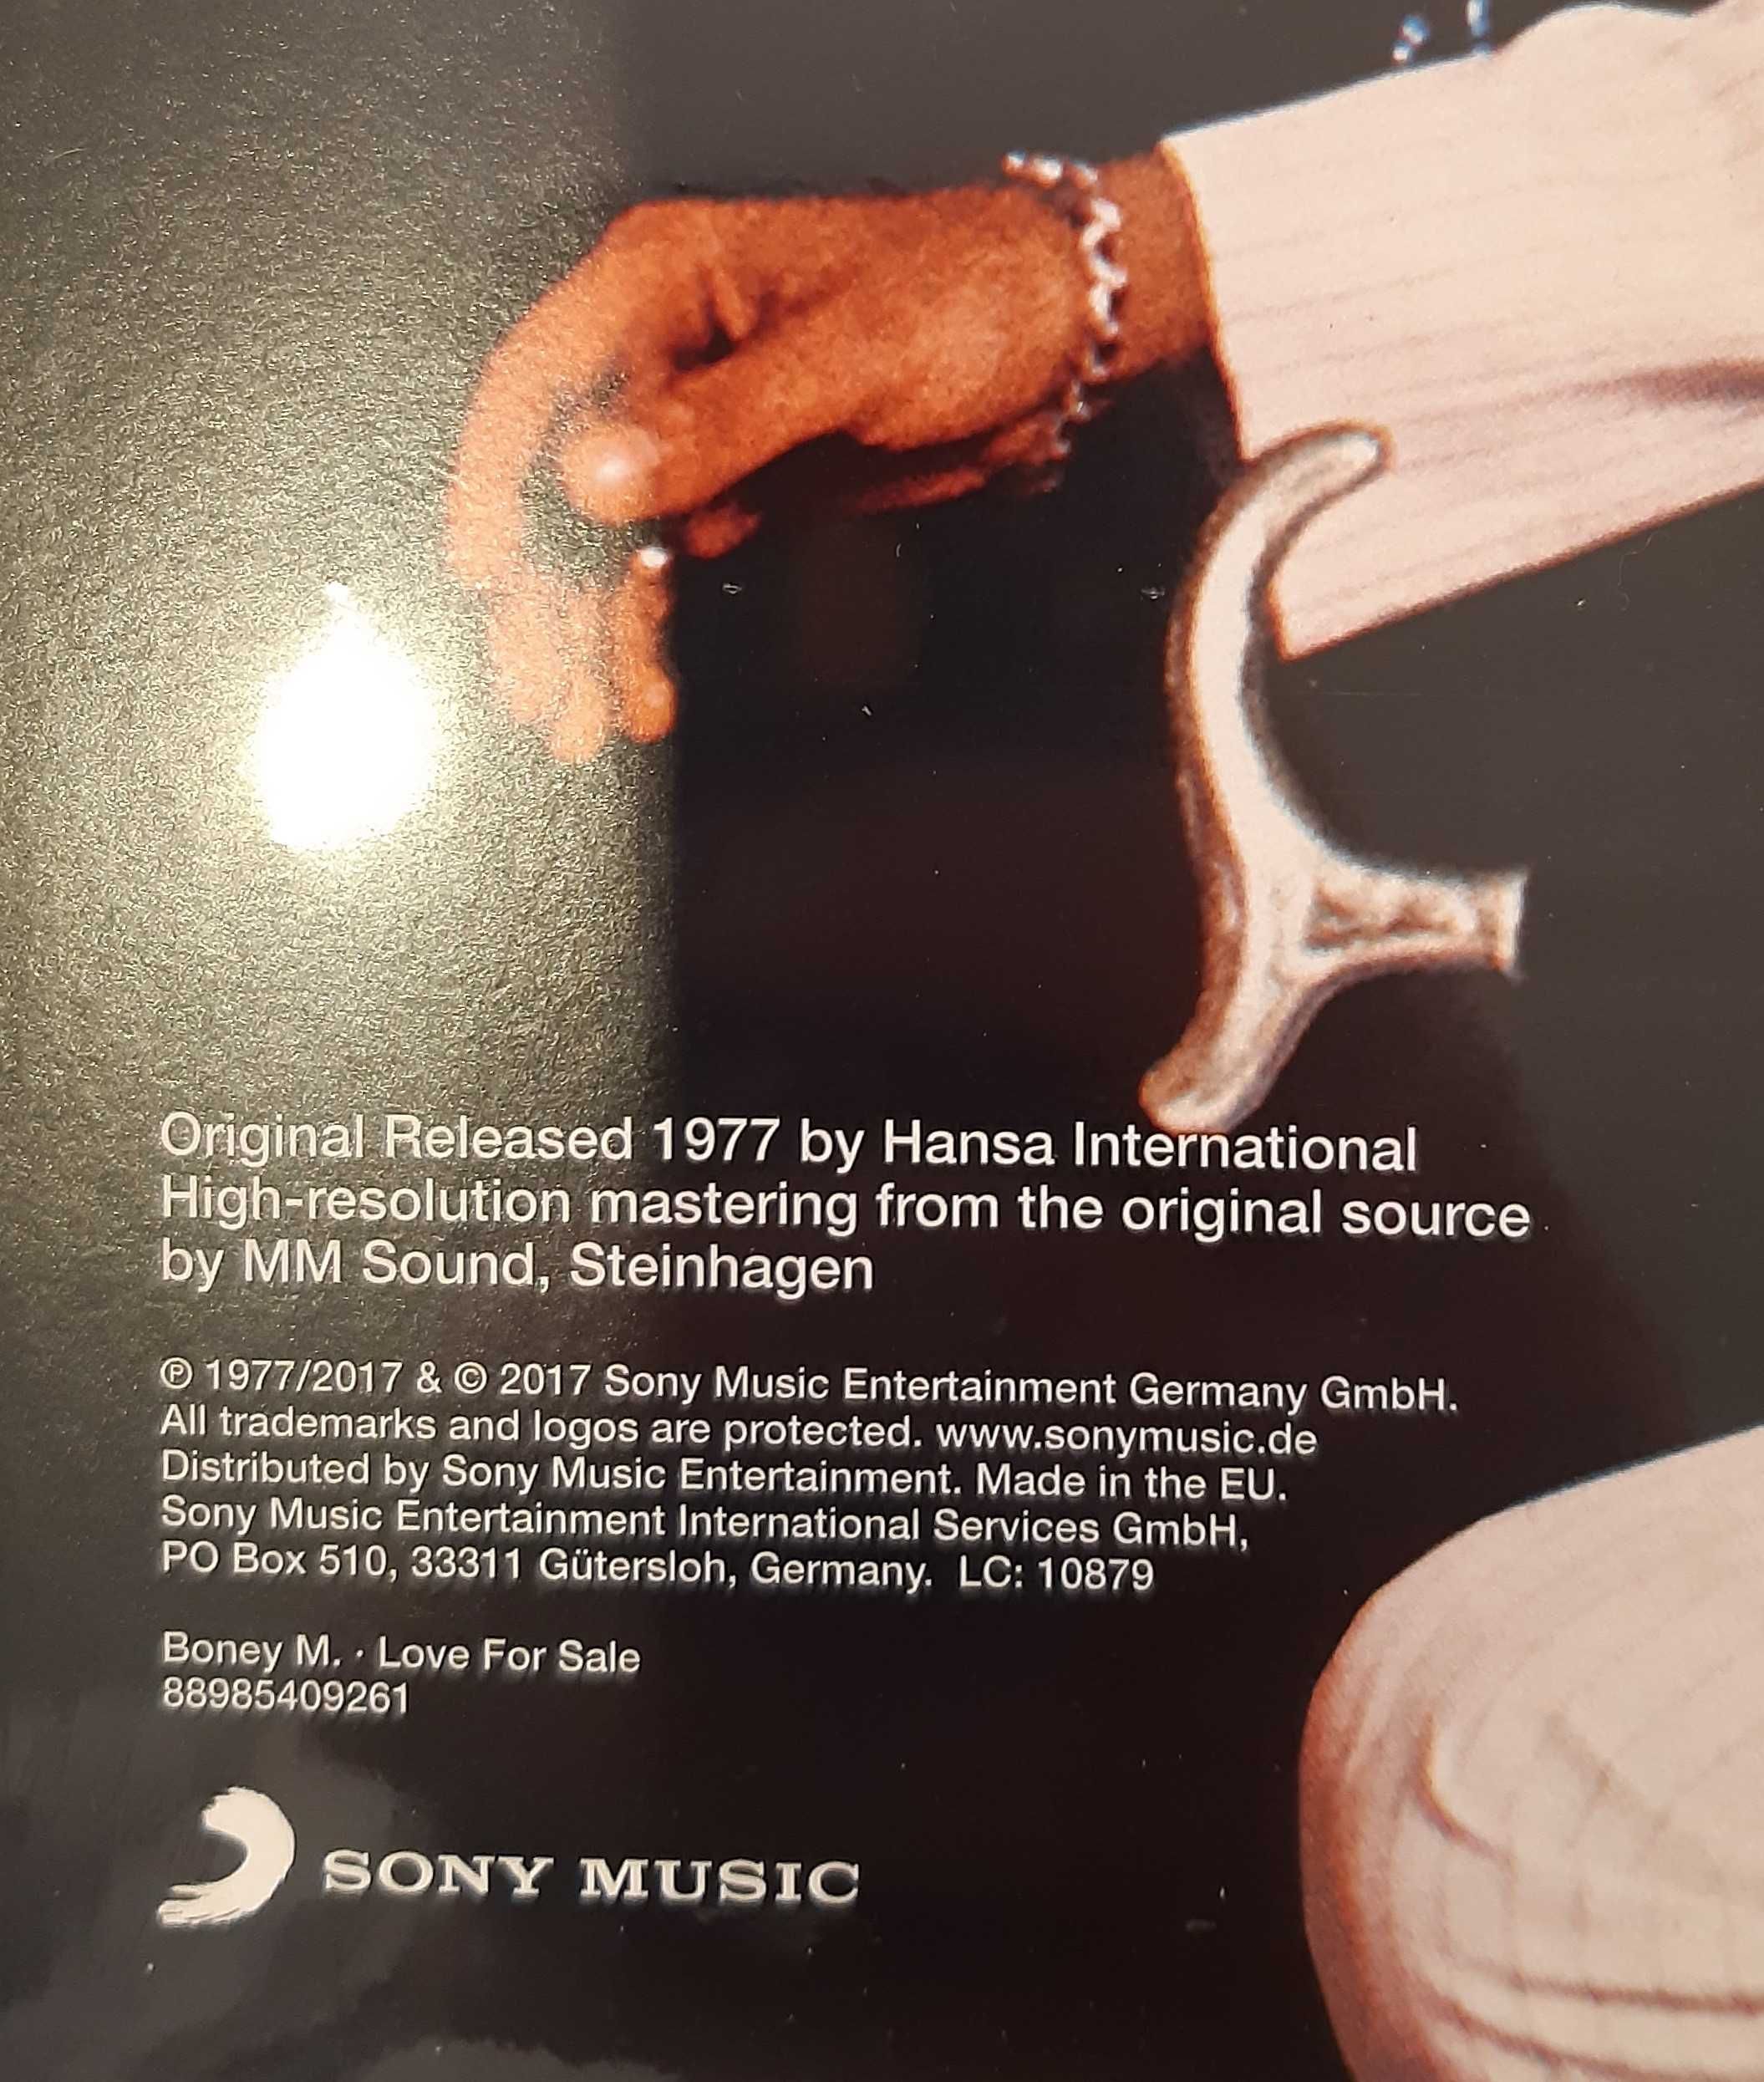 Boney M. Love for sale Winyl LP nowa w folii 2017